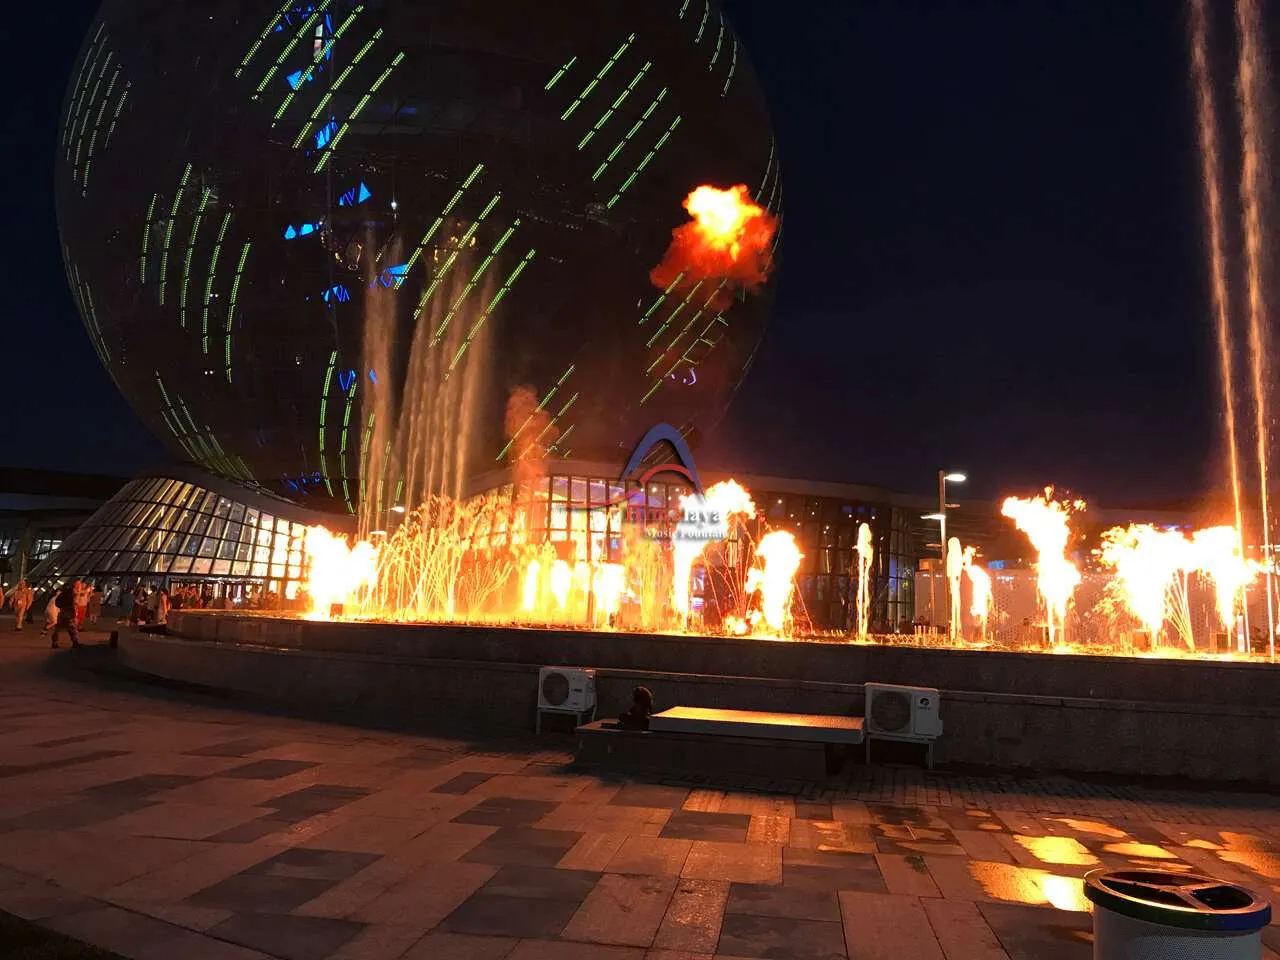 Astana Musical dancing fountain and Water Fire Fountain Show